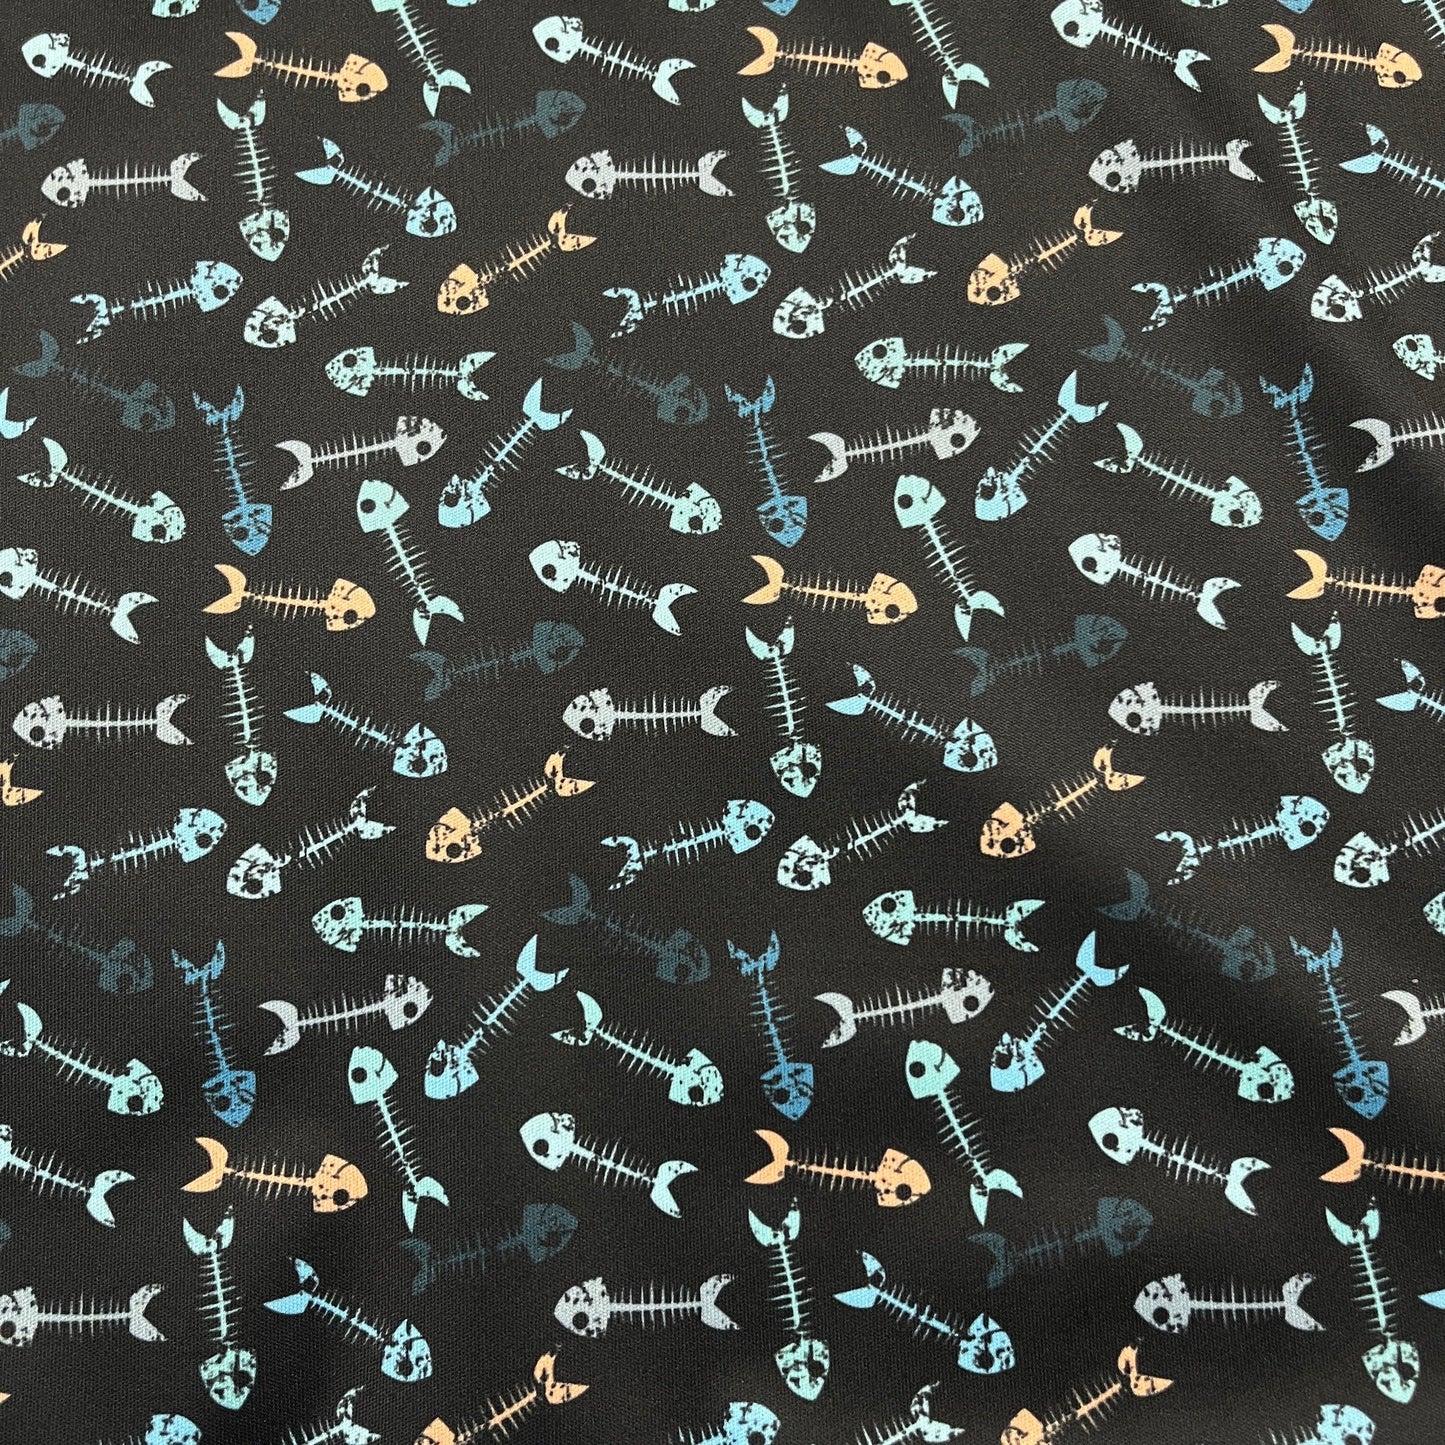 Fish Bones on Black 1 mil PUL Fabric - Made in the USA - Nature's Fabrics